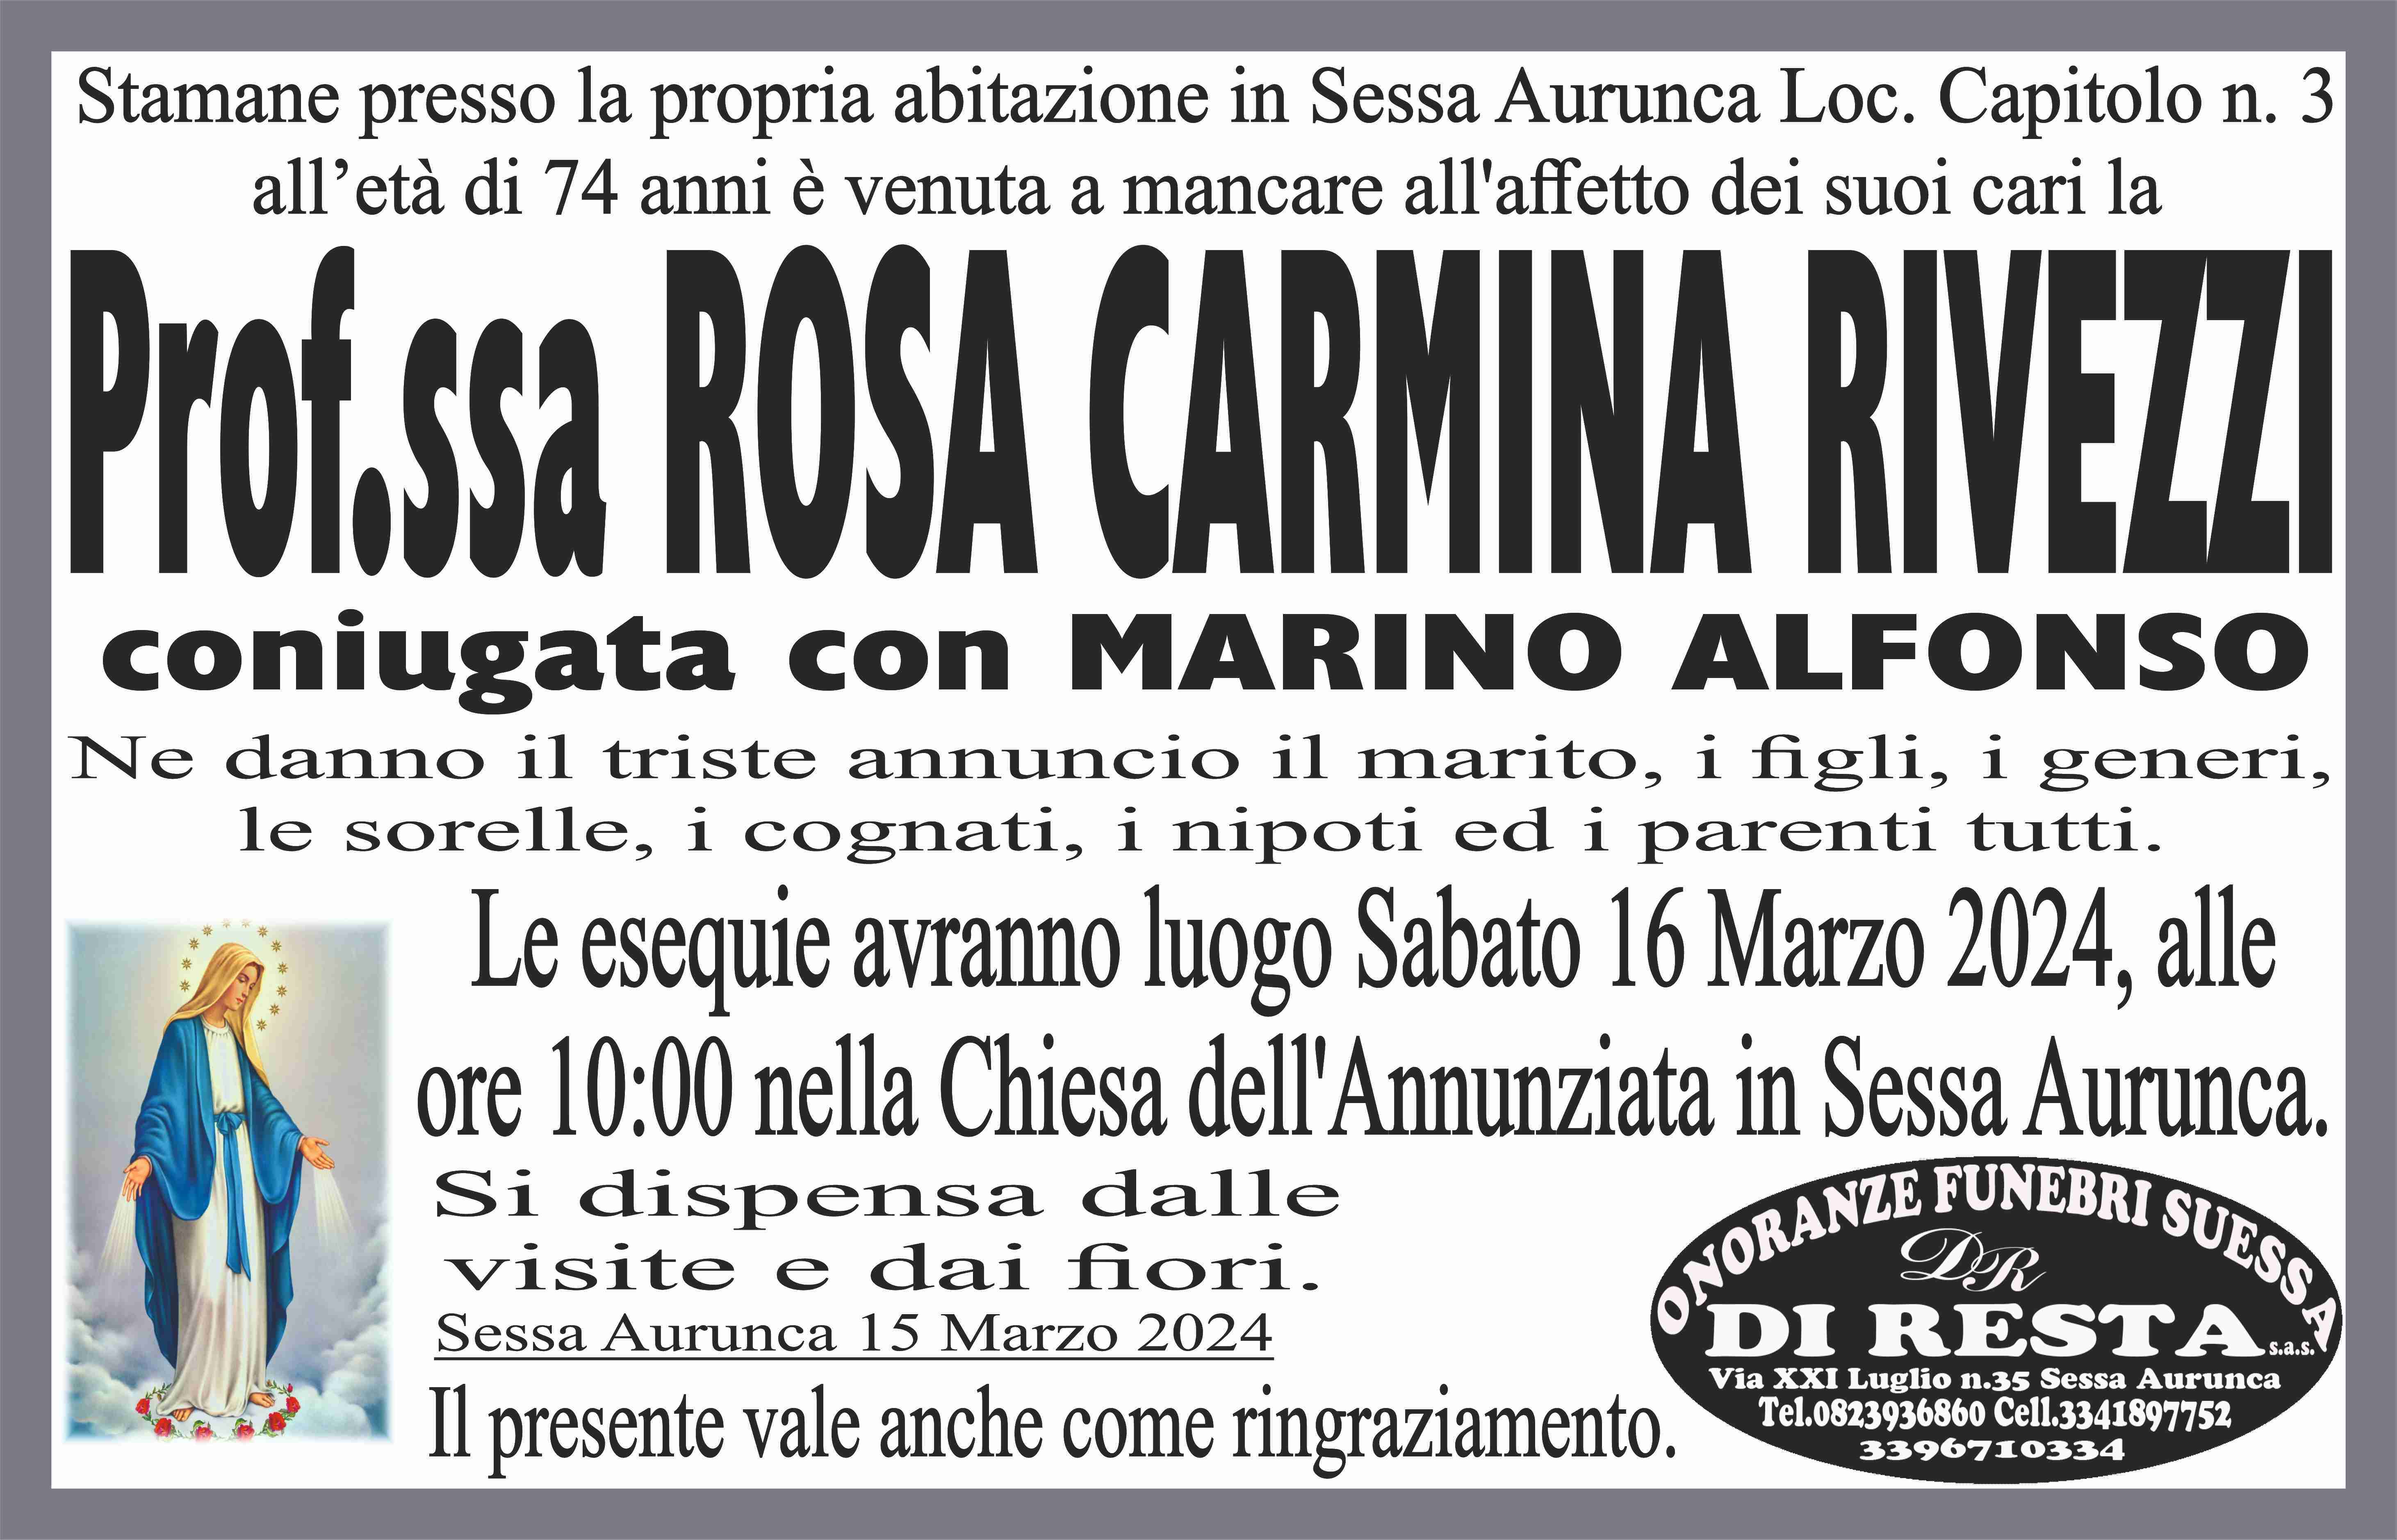 Rosa Carmina Rivezzi